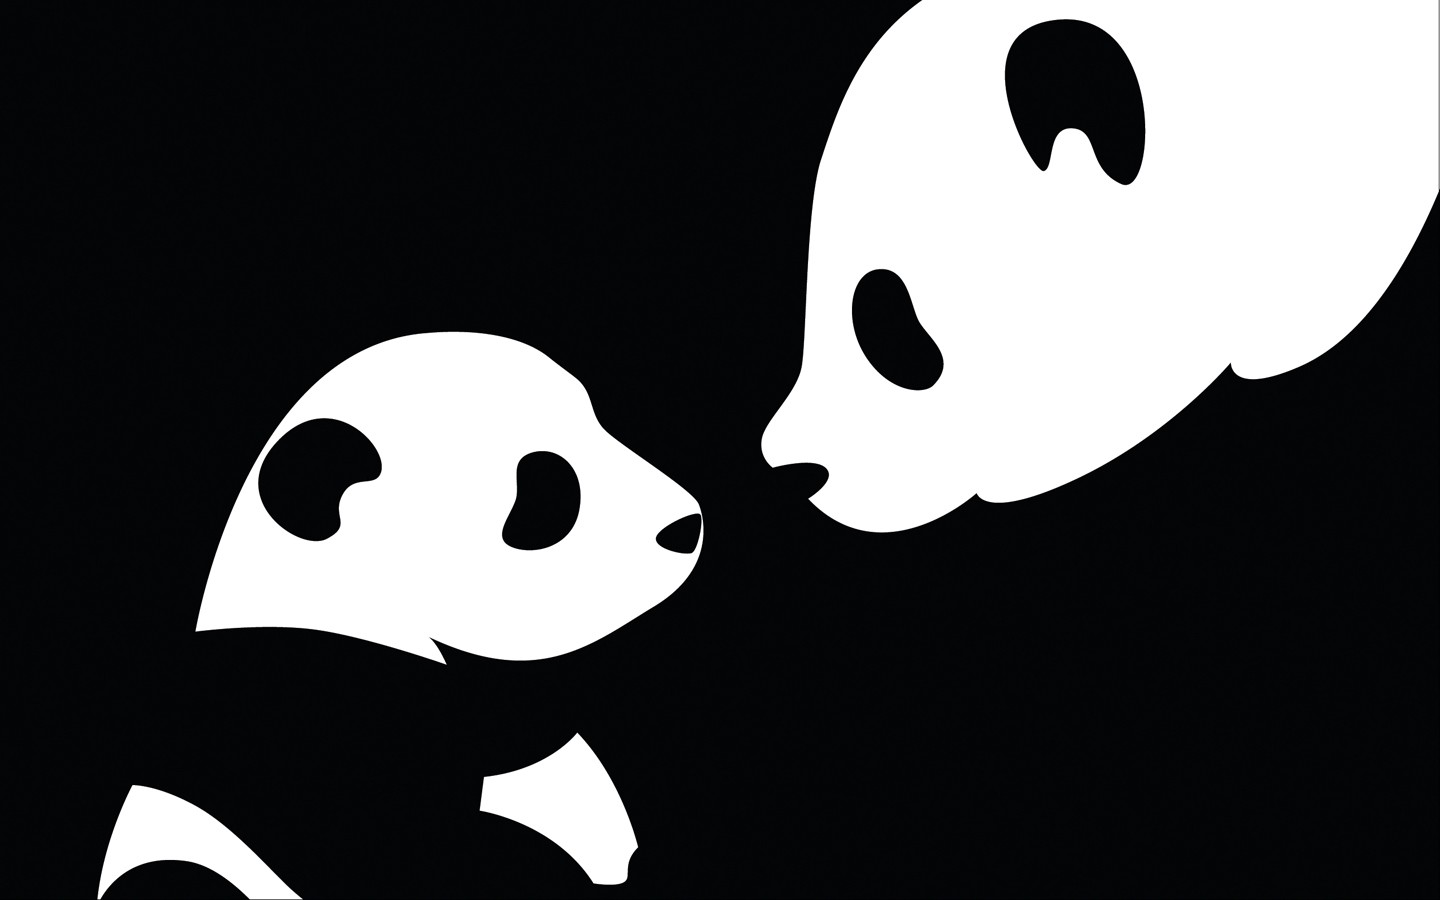 General 1440x900 panda artwork animals minimalism mammals bears